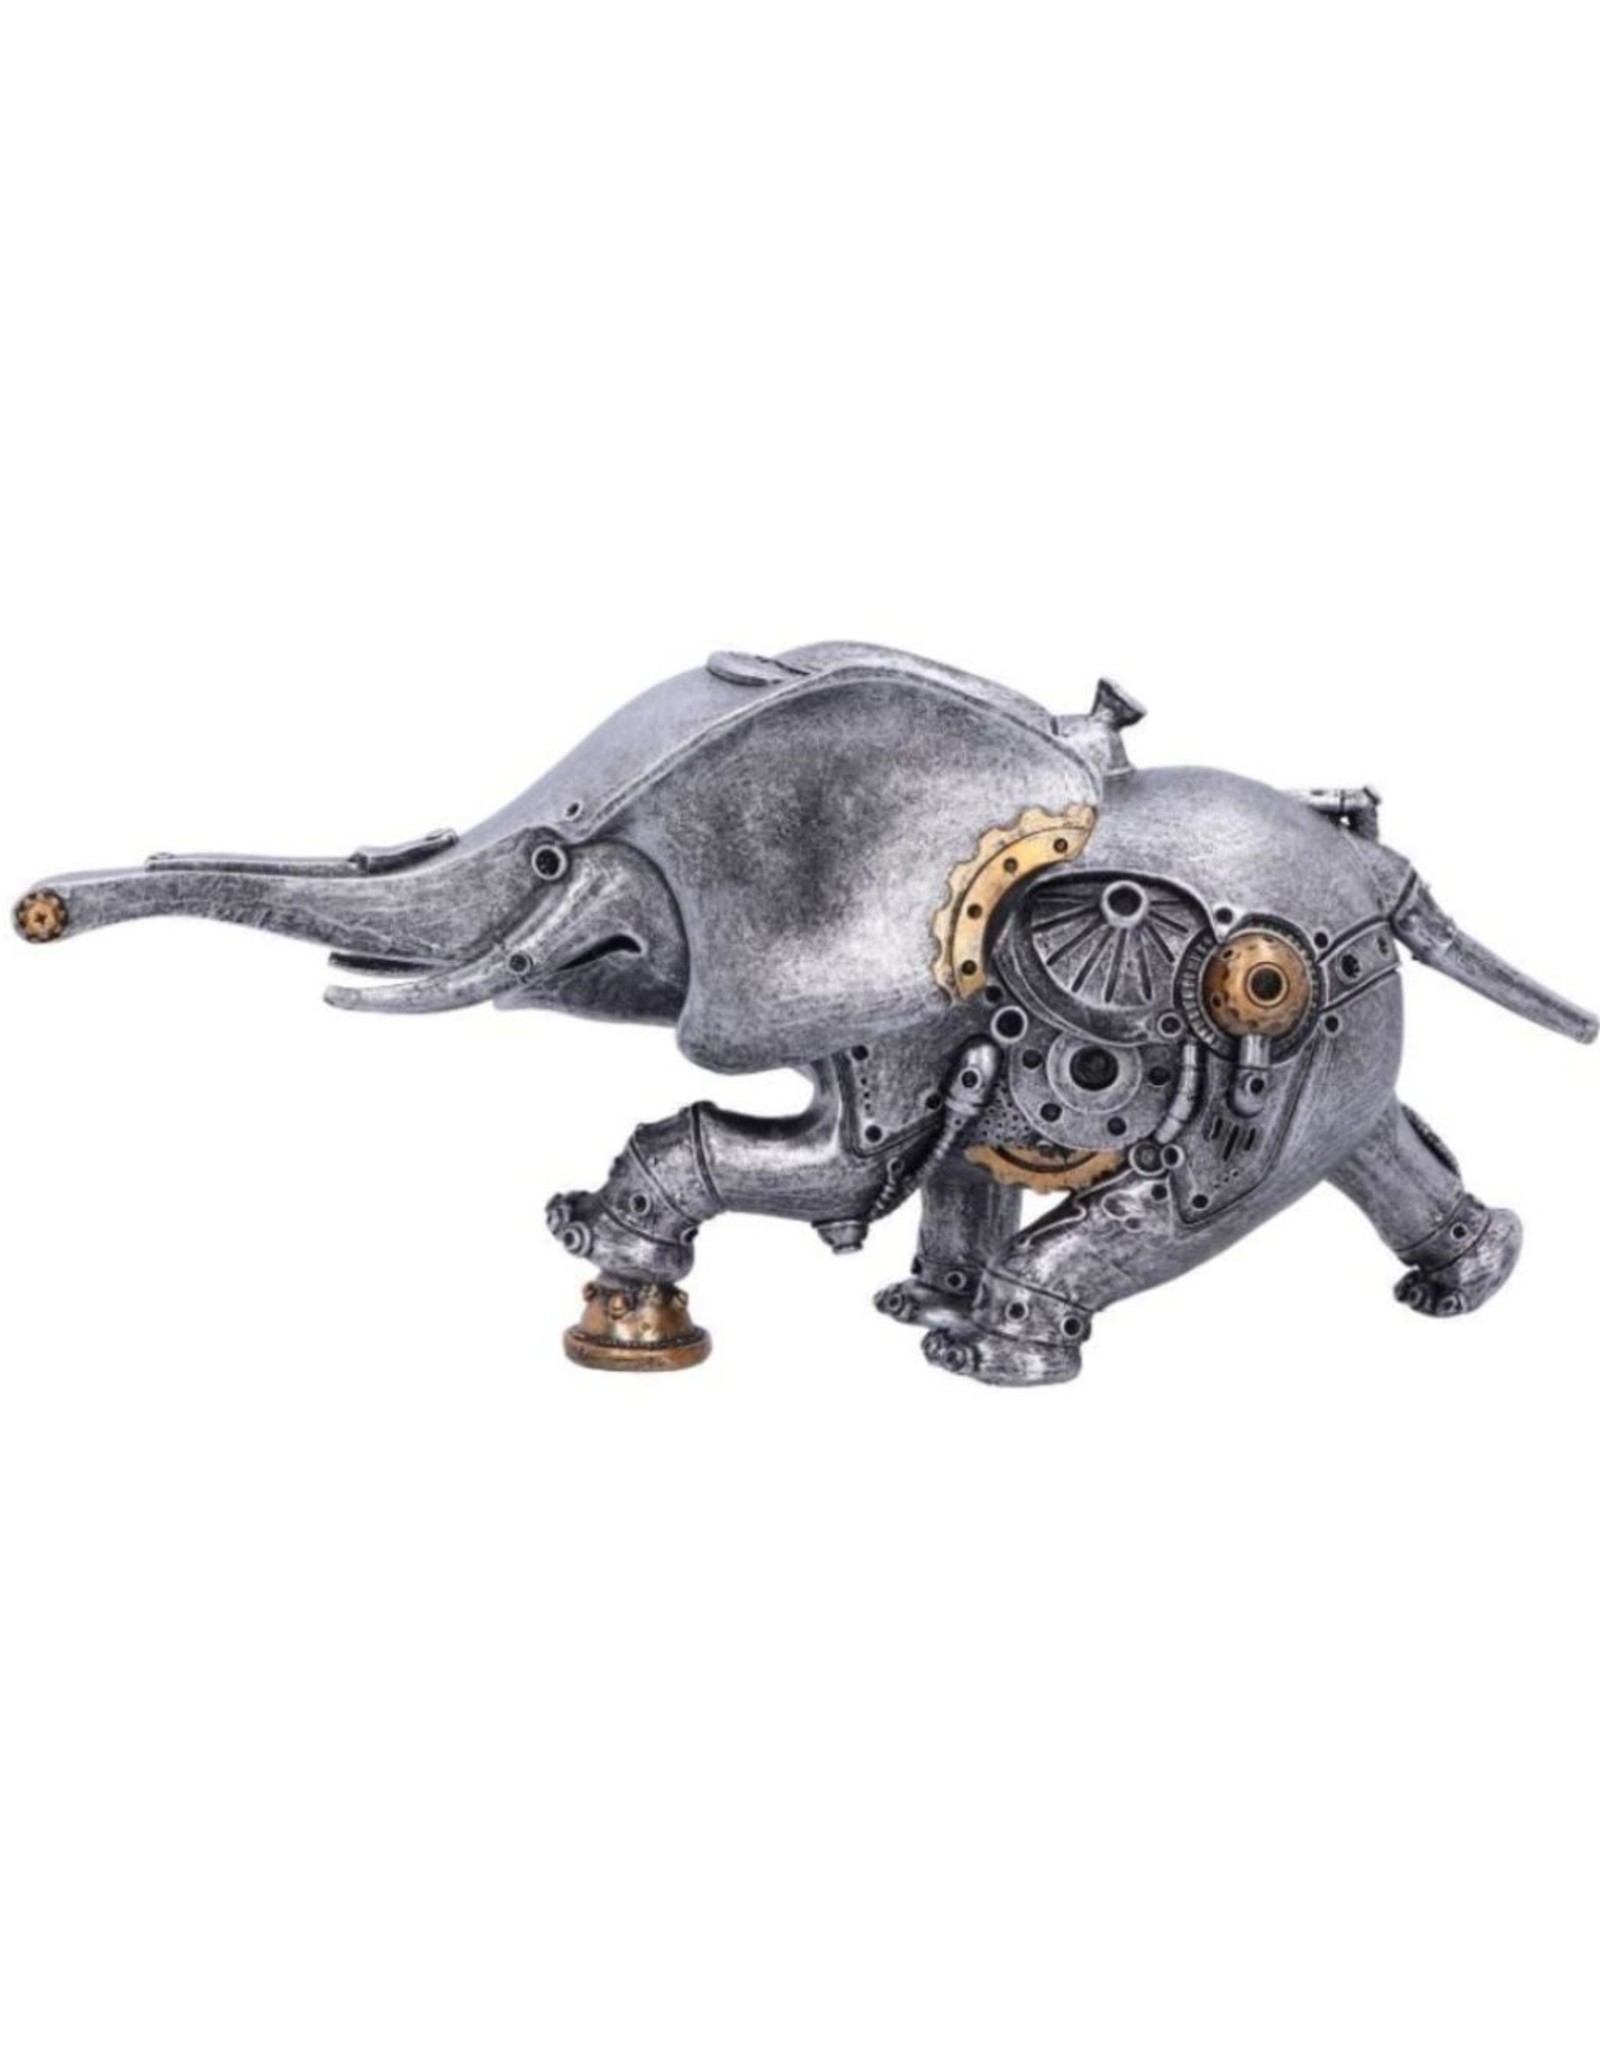 Alator Giftware & Lifestyle - Mechanical Mammal Steampunk Figurine 31cm